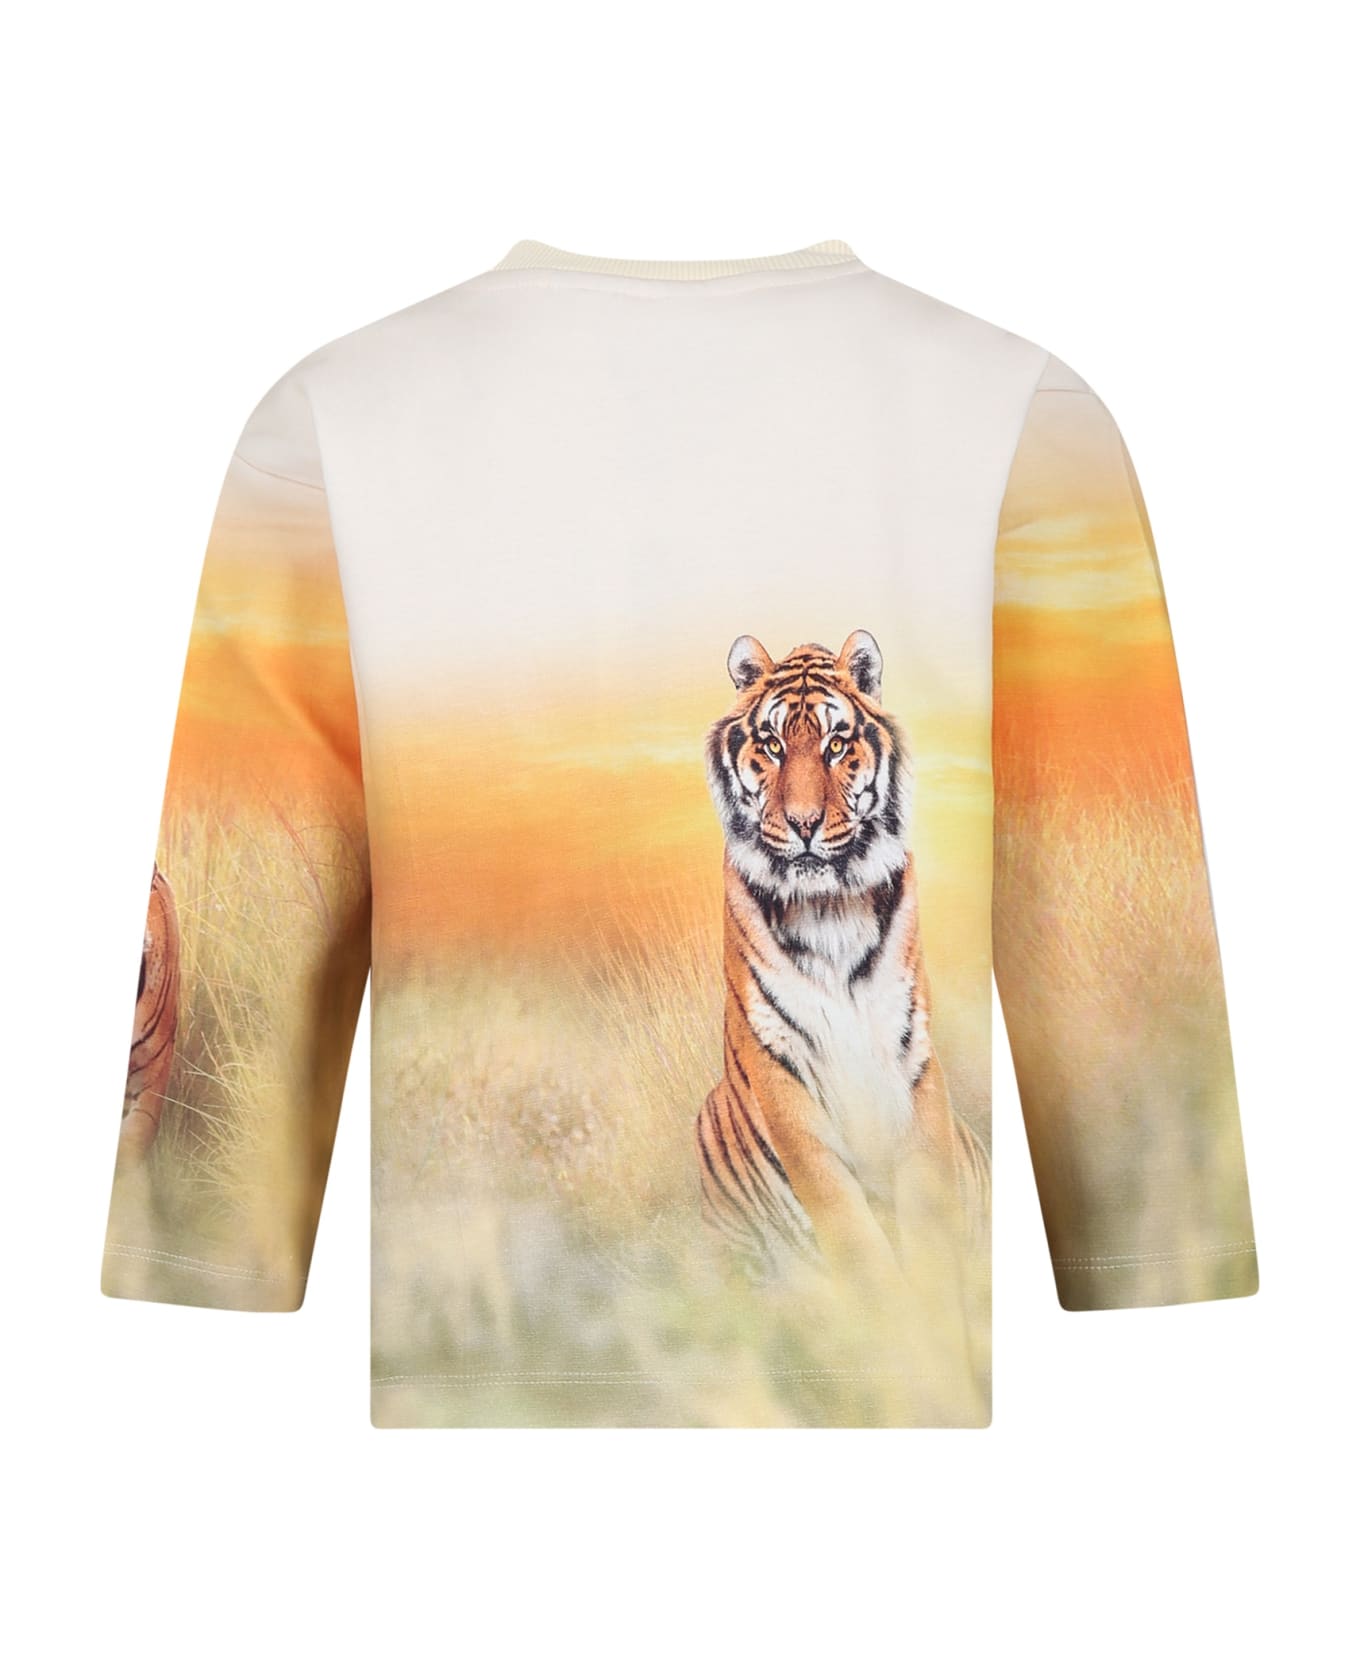 Molo Ivory Sweatshirt For Boy With Tiger Print - Ivory ニットウェア＆スウェットシャツ